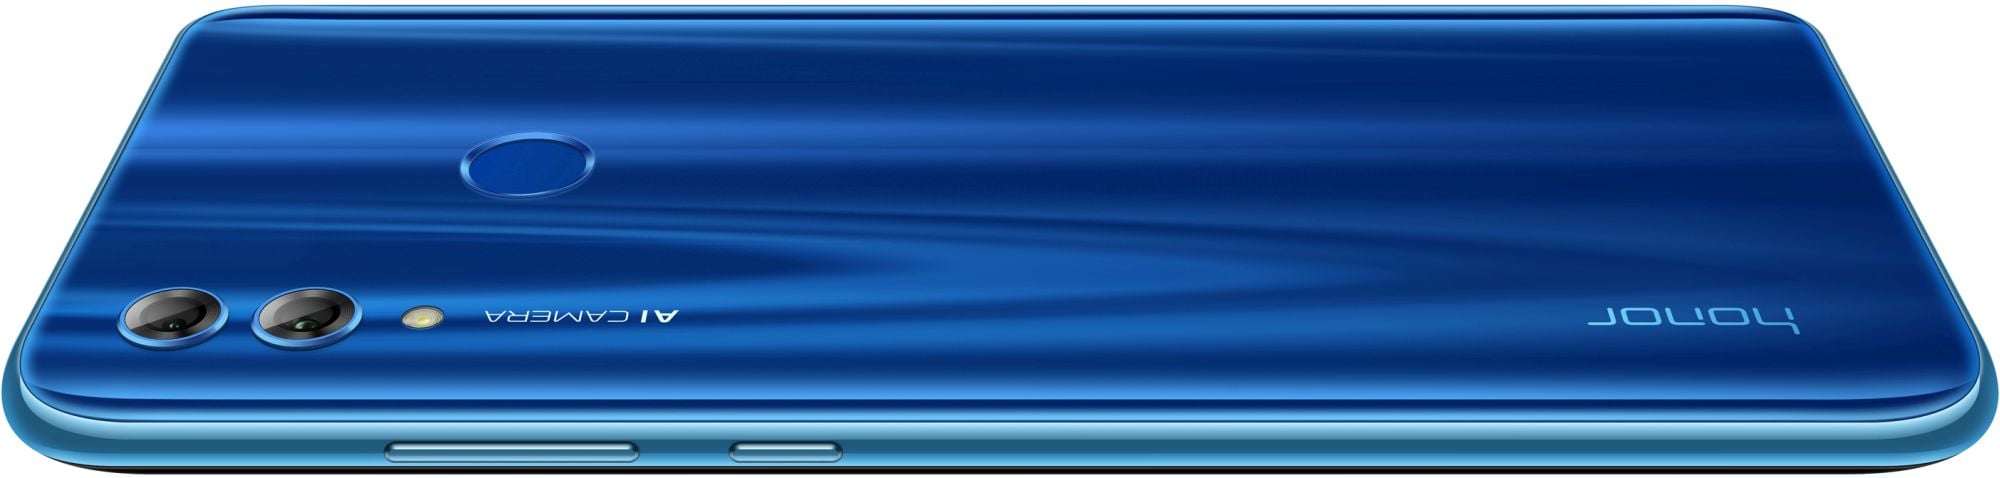 Huawei Honor 10 Lite 64GB Blue